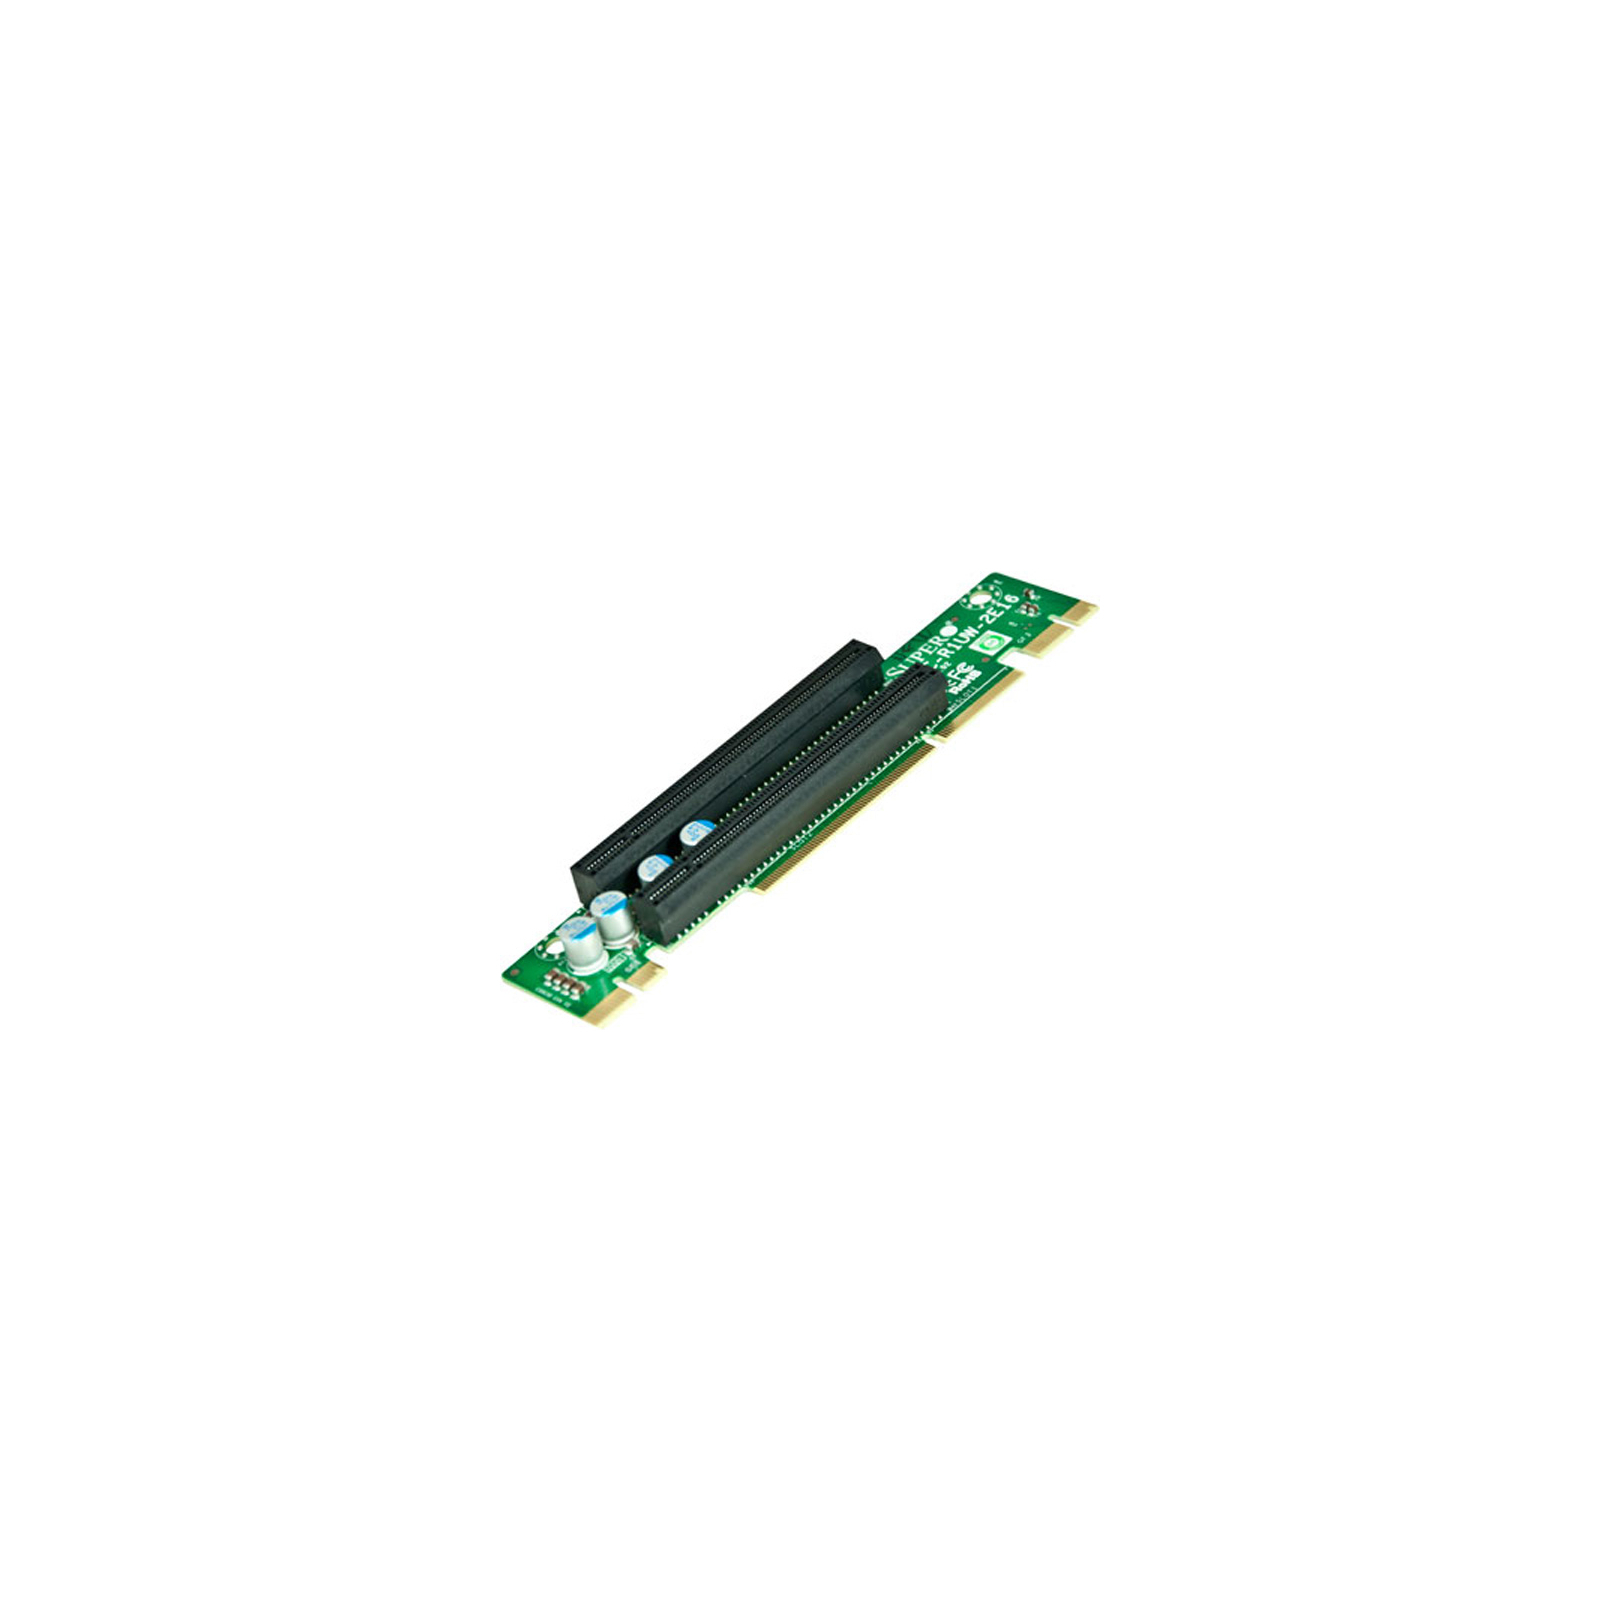 Адаптер Supermicro Riser card 1U (2 PCI-E x16, LHS WIO) (RSC-R1UW-2E16)